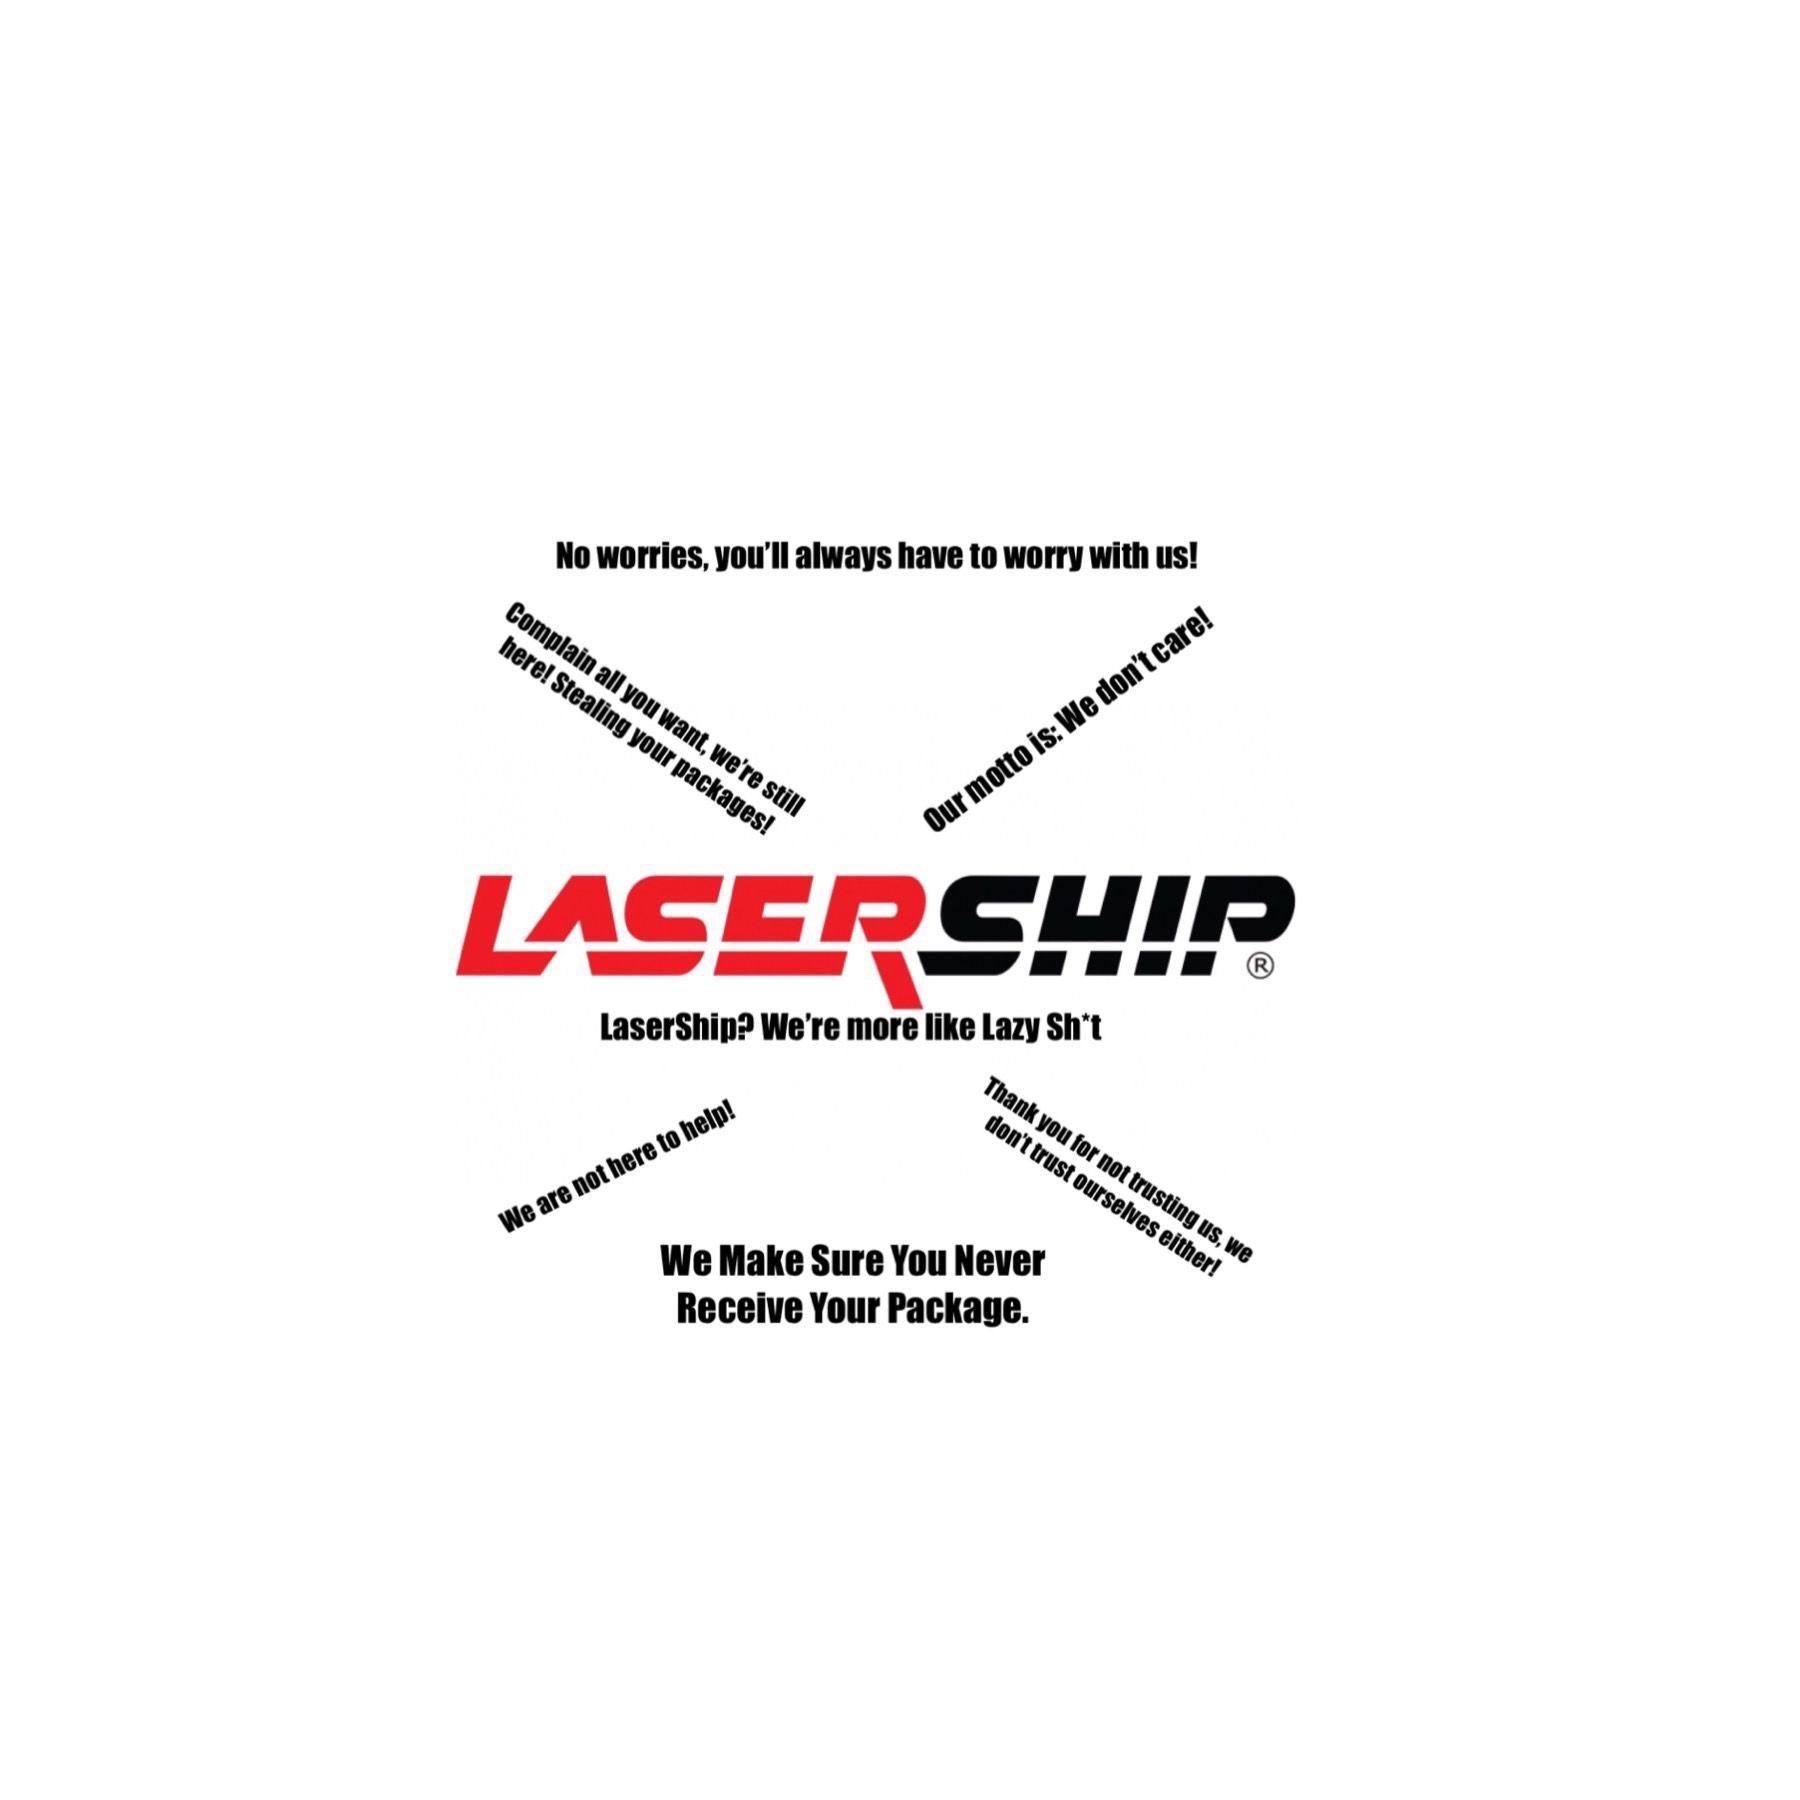 LaserShip Logo - LaserShip Reviews - 131 Reviews of Lasership.com | Sitejabber